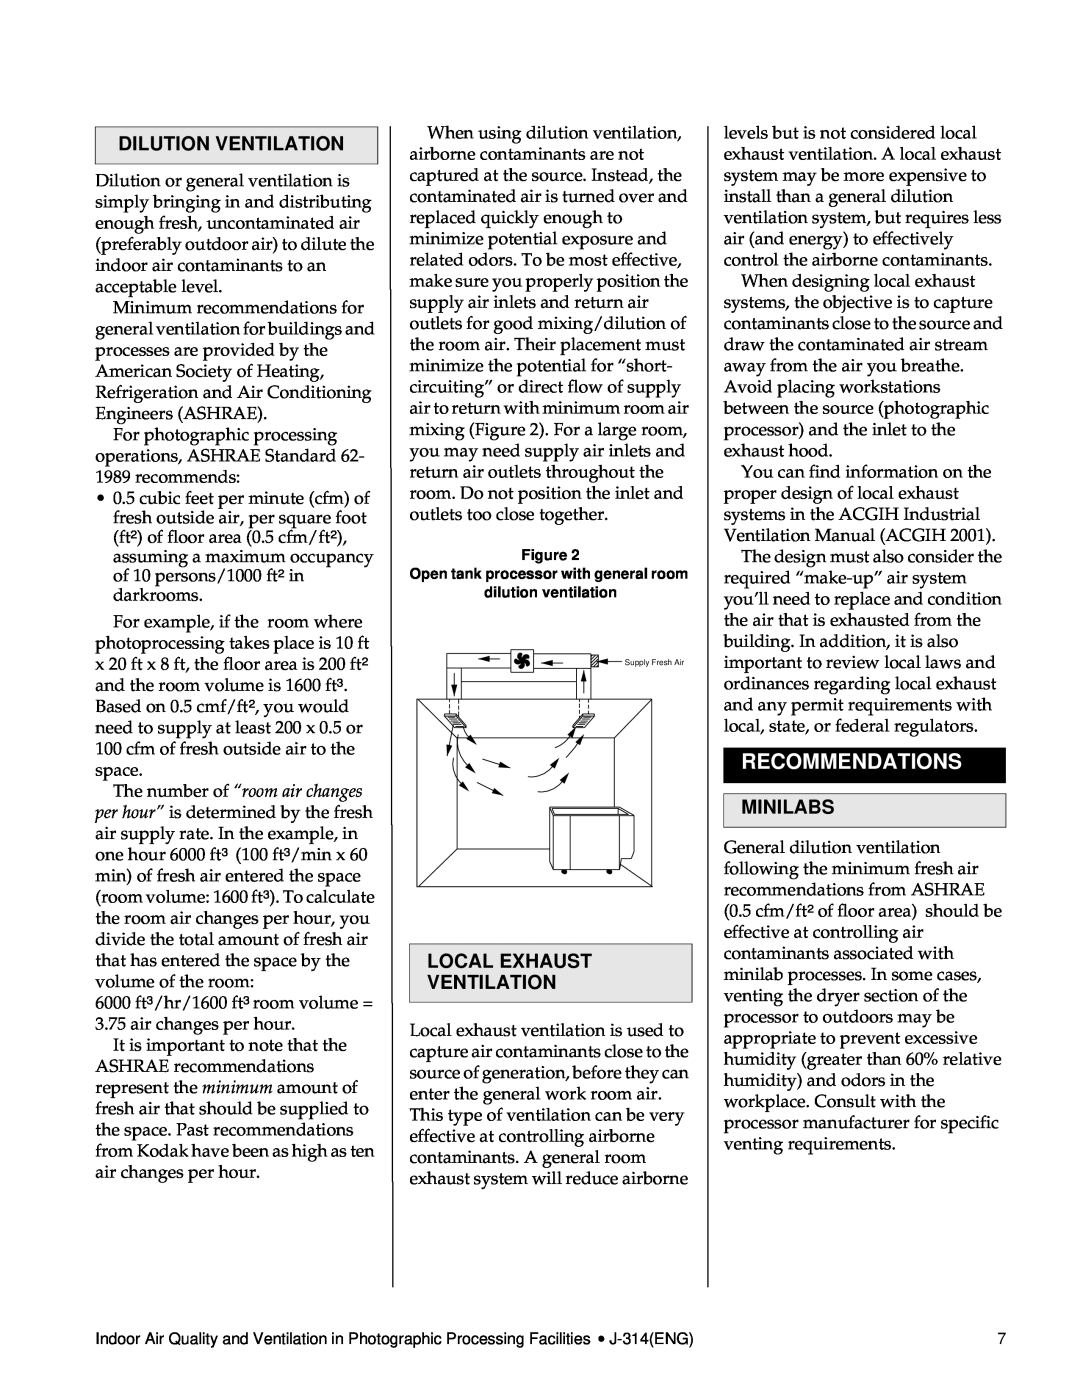 Kodak J-314 manual Recommendations, Dilution Ventilation, Local Exhaust Ventilation, Minilabs 